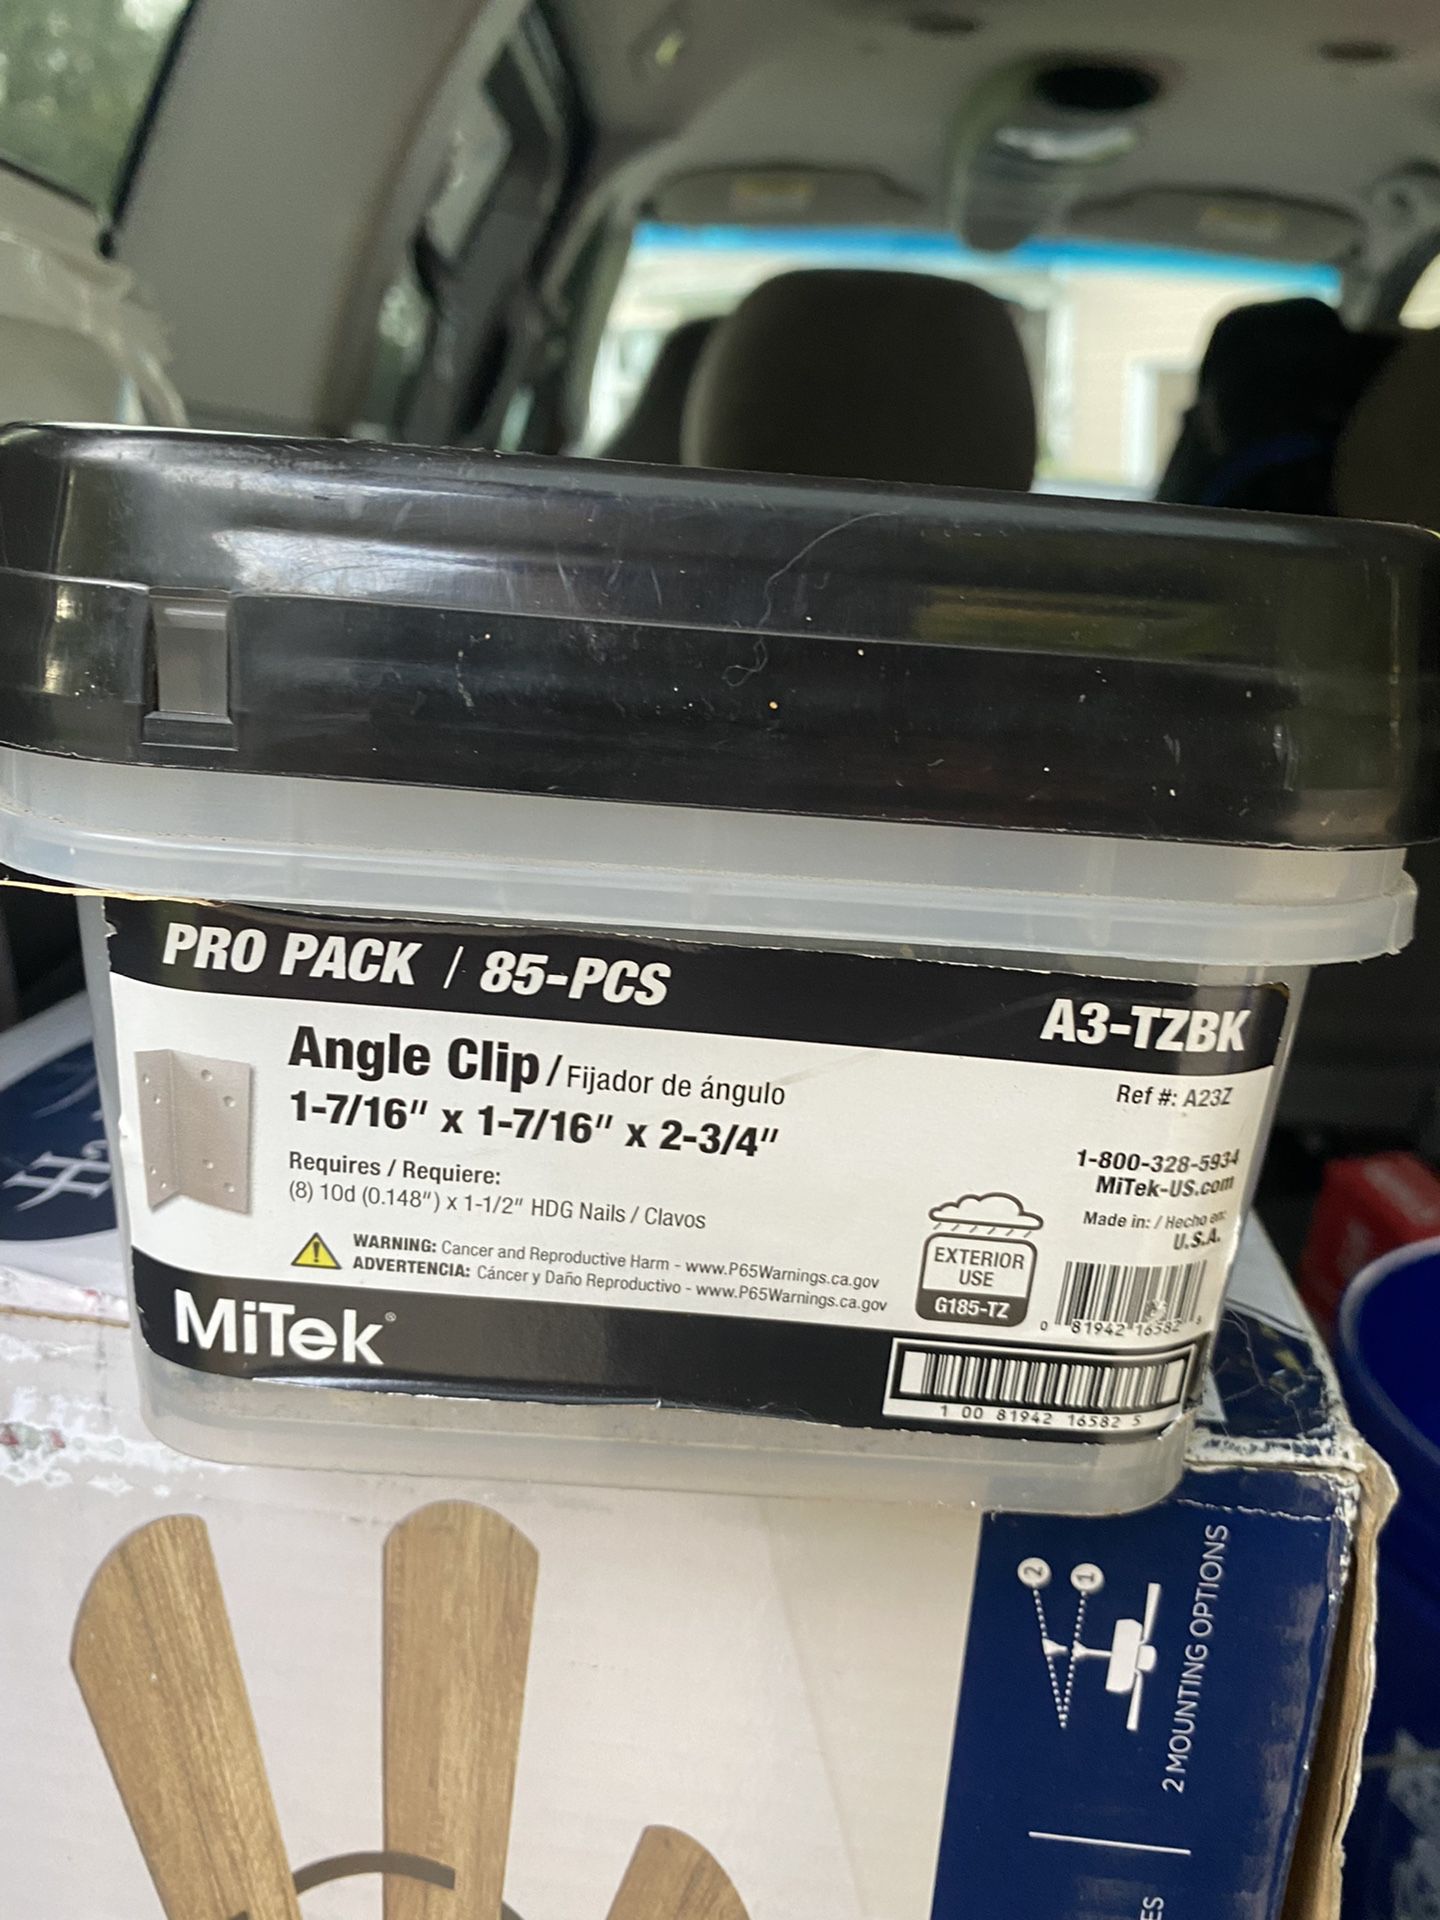 Mitek 1-7/16” x 2-3/4” Angle Clip 85-PCs